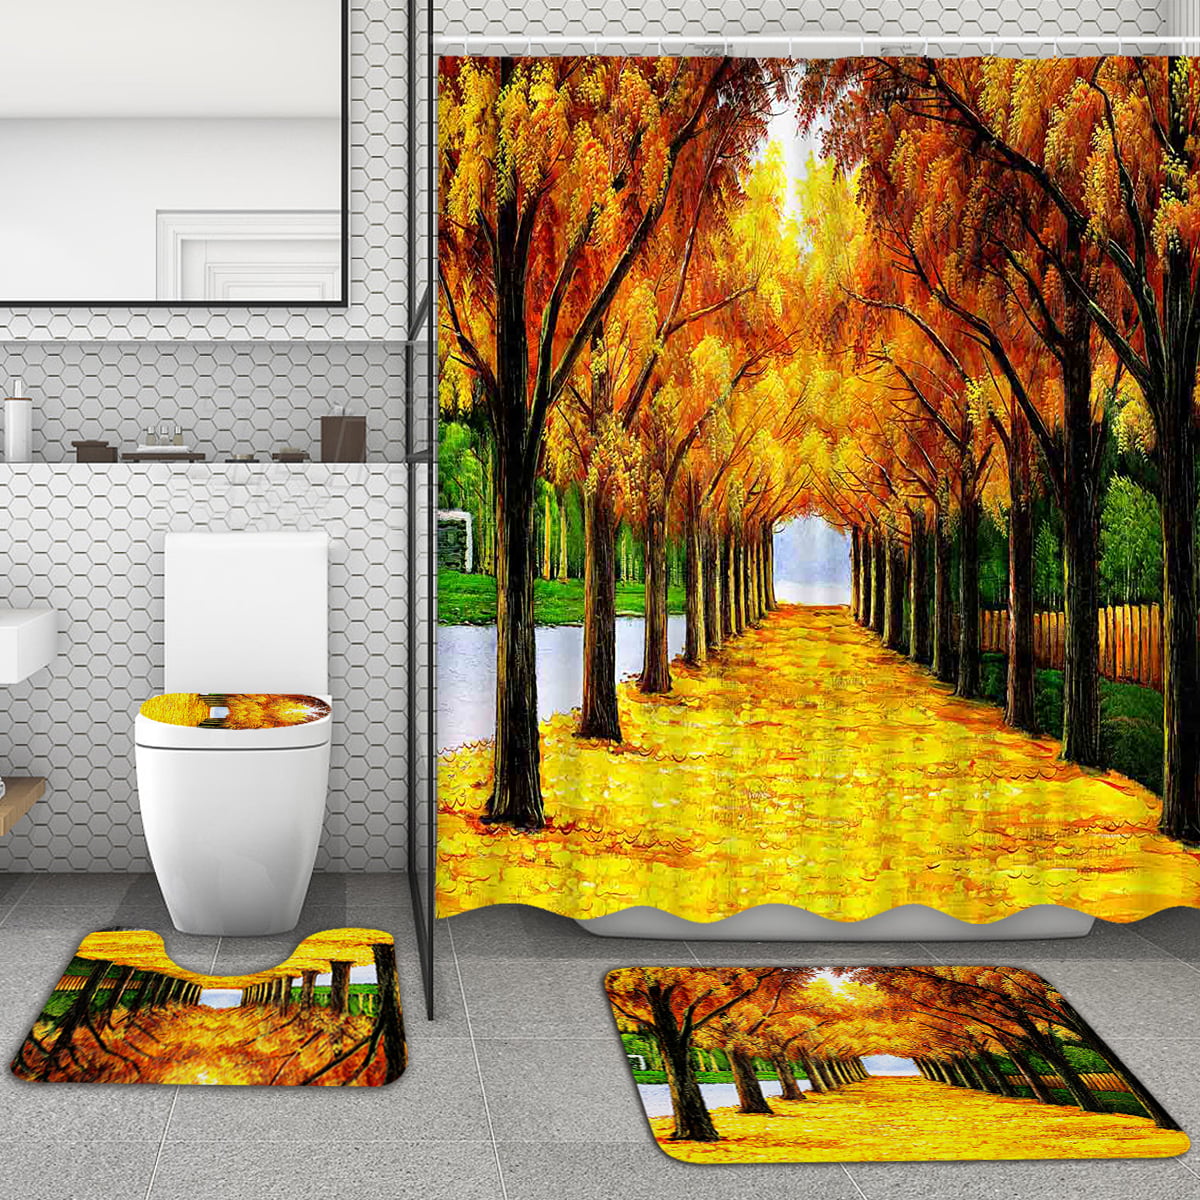 Details about   180x180cm Shower Curtain Waterproof Polyester 2PCS Toilet Floor 